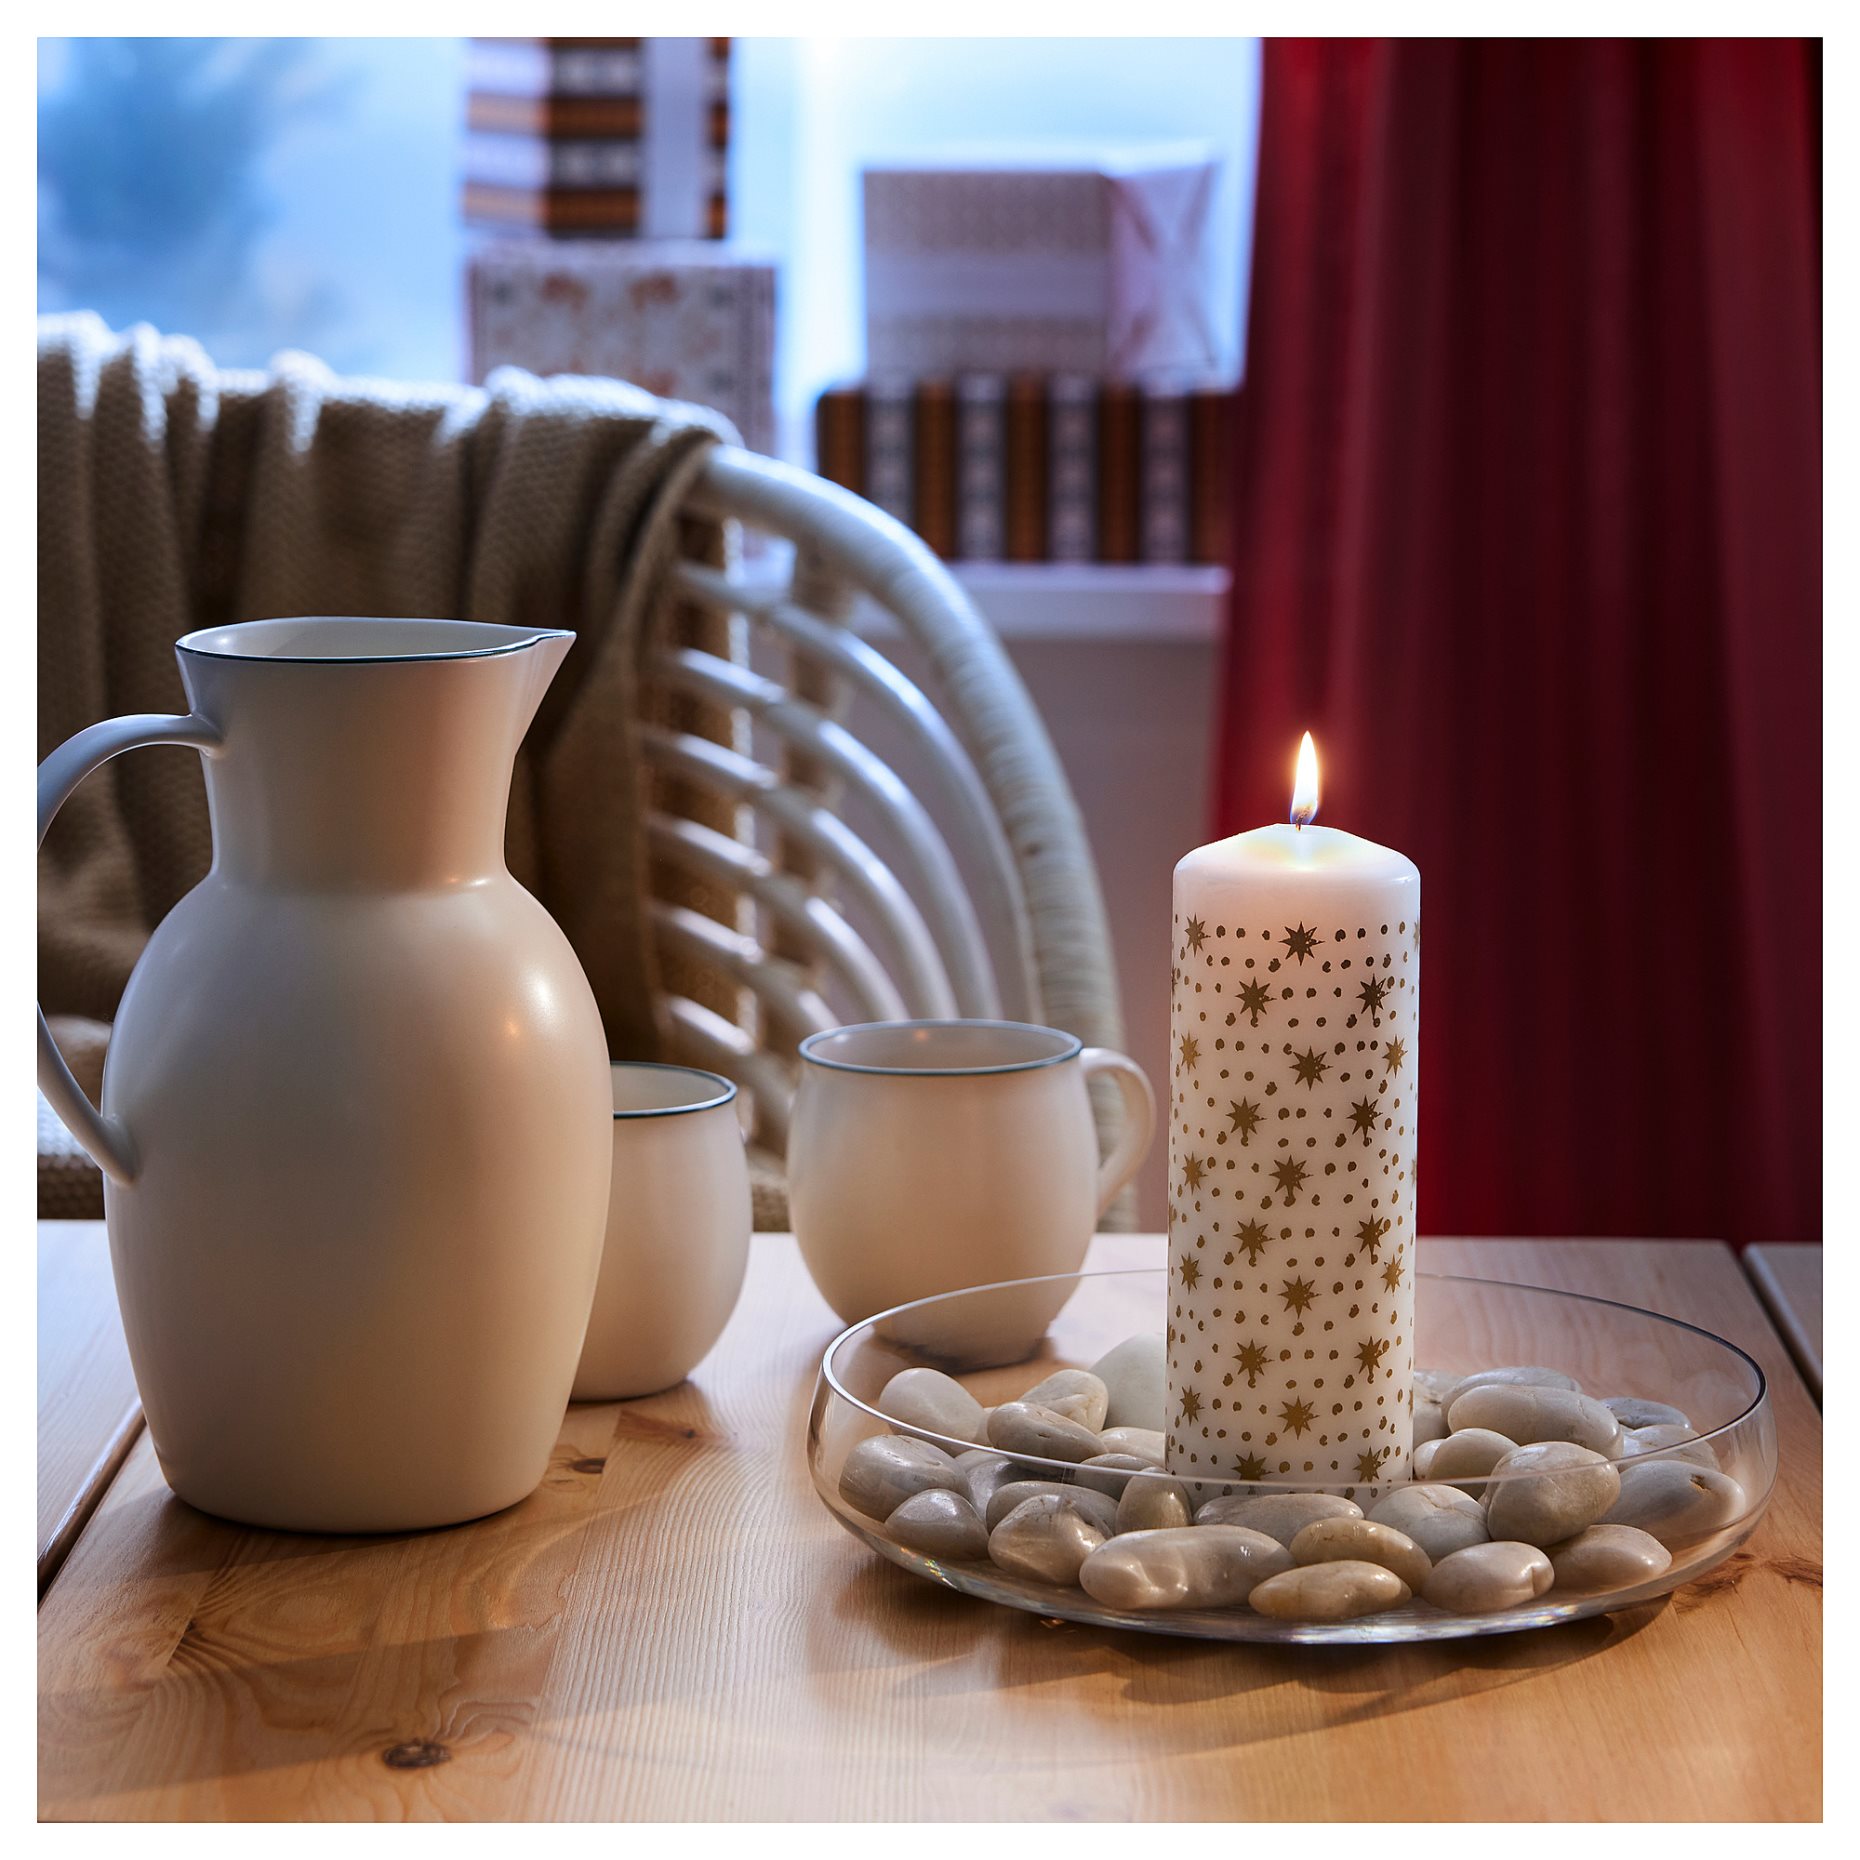 VINTERFINT, unscented pillar candle, 19 cm, 305.519.10